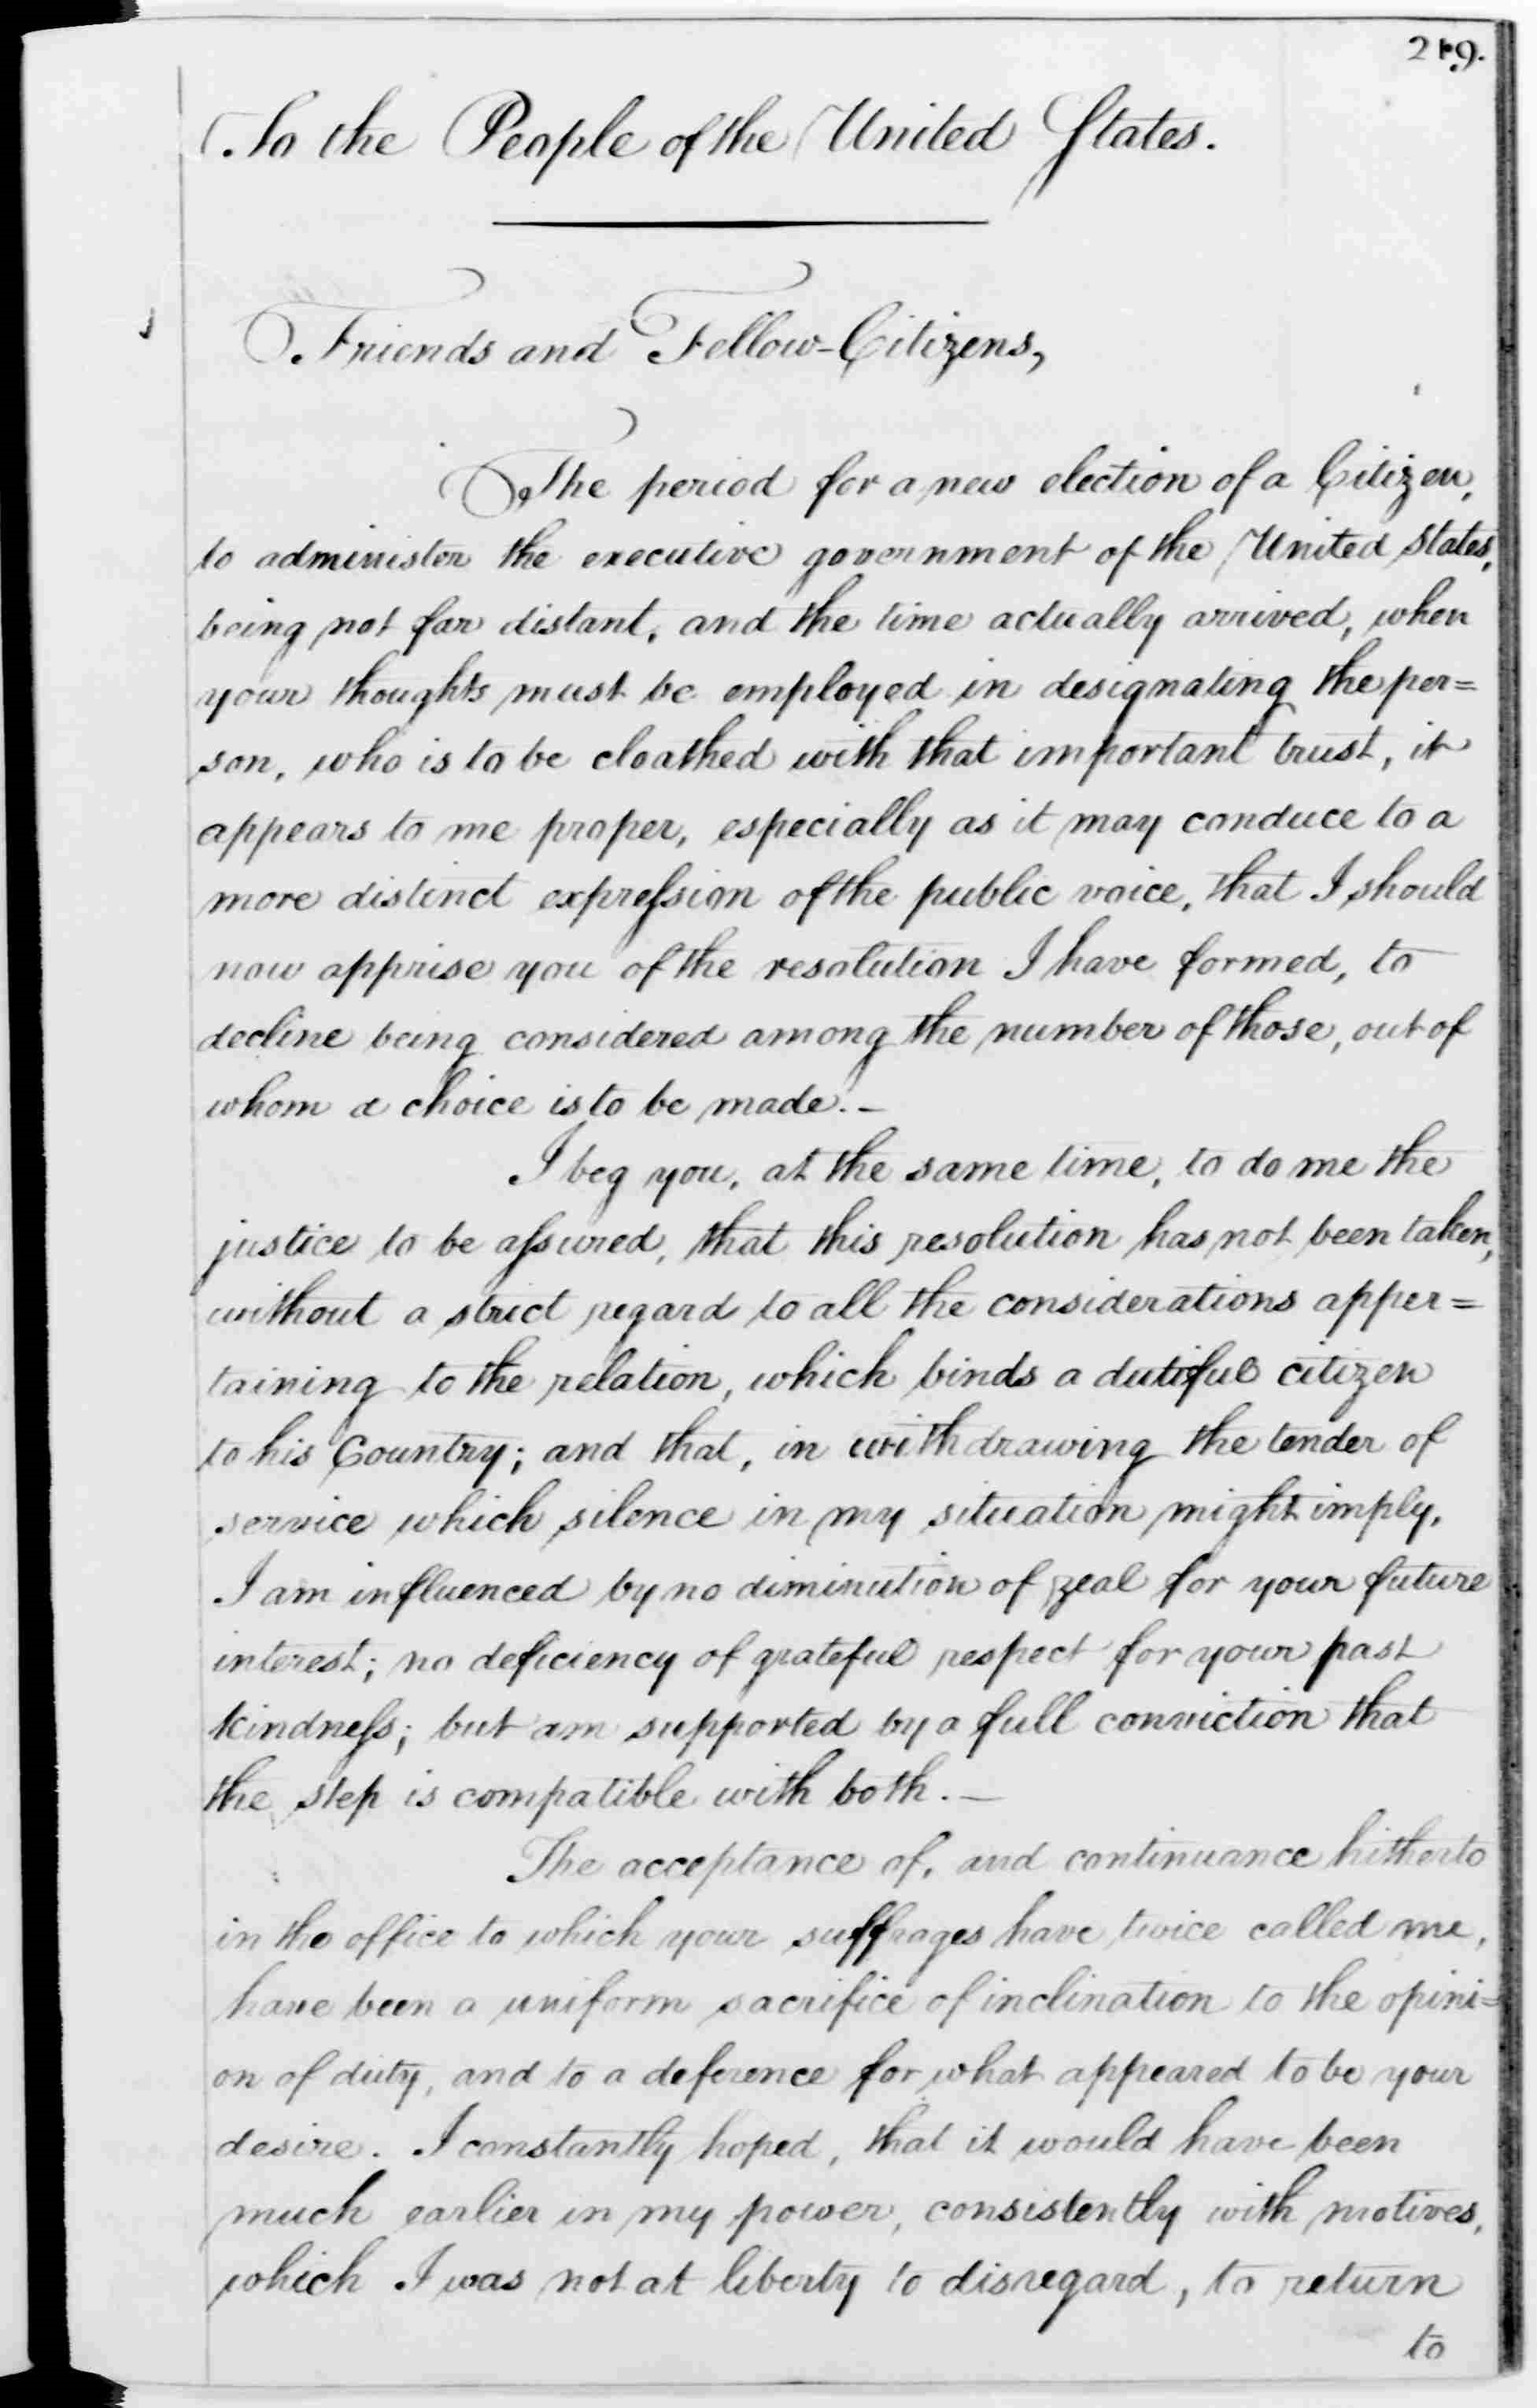 An excerpt of Washington’s Farewell Address, September 19, 1796. Source: Library of Congress.